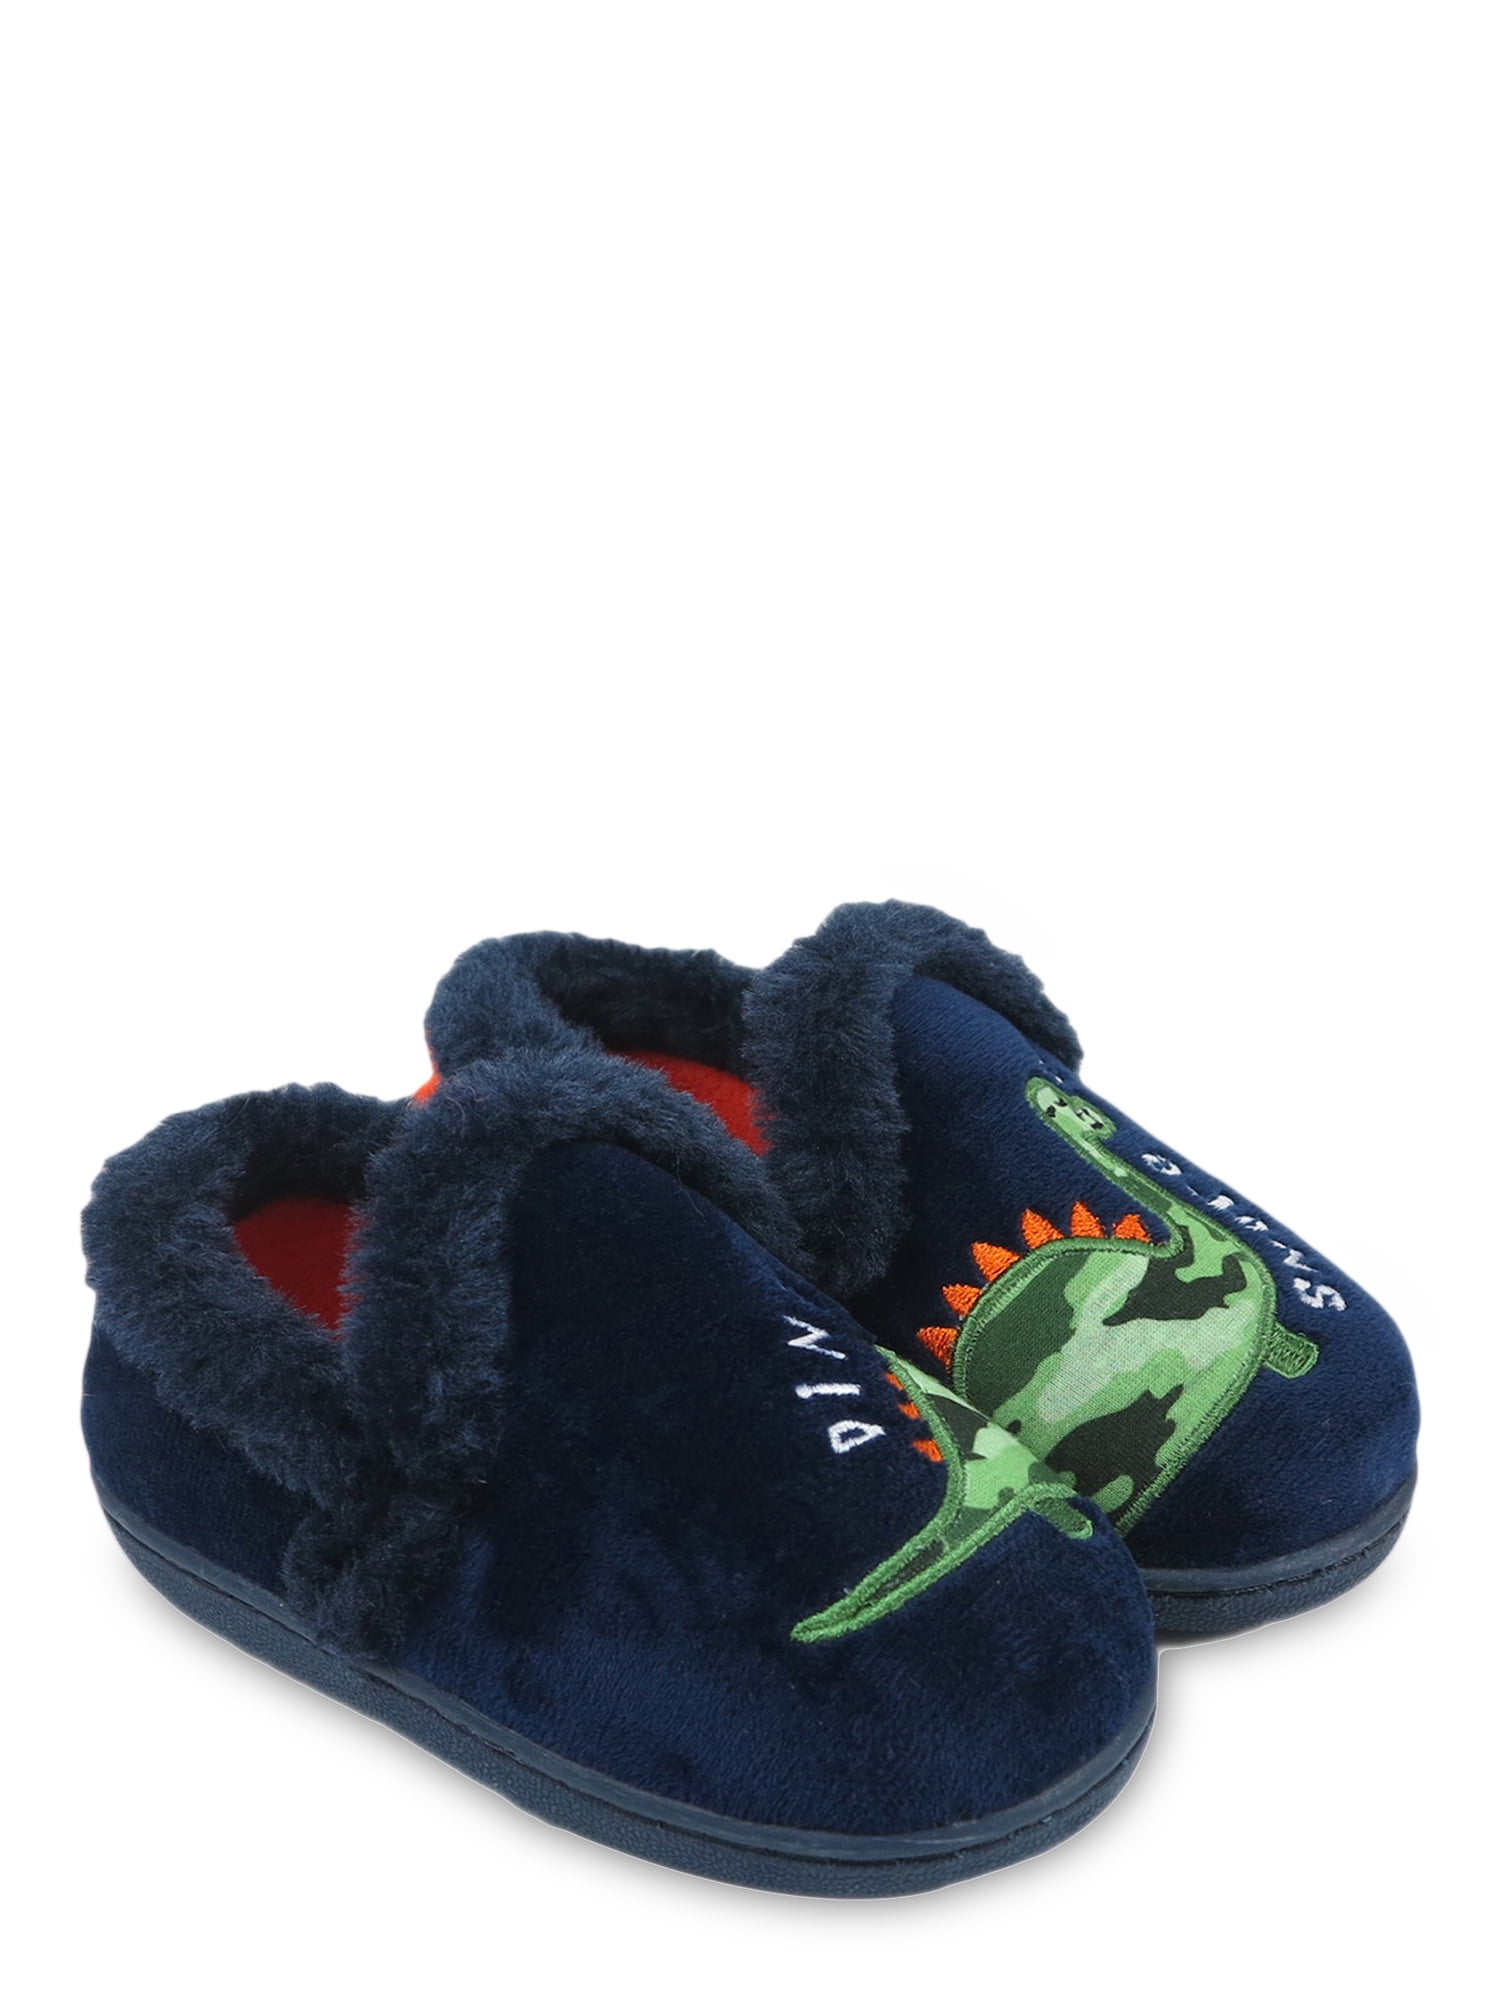 NEW Boys Dinosaur T-Rex Plush Slipper Size 7/8 Blue By Wonder Nation 